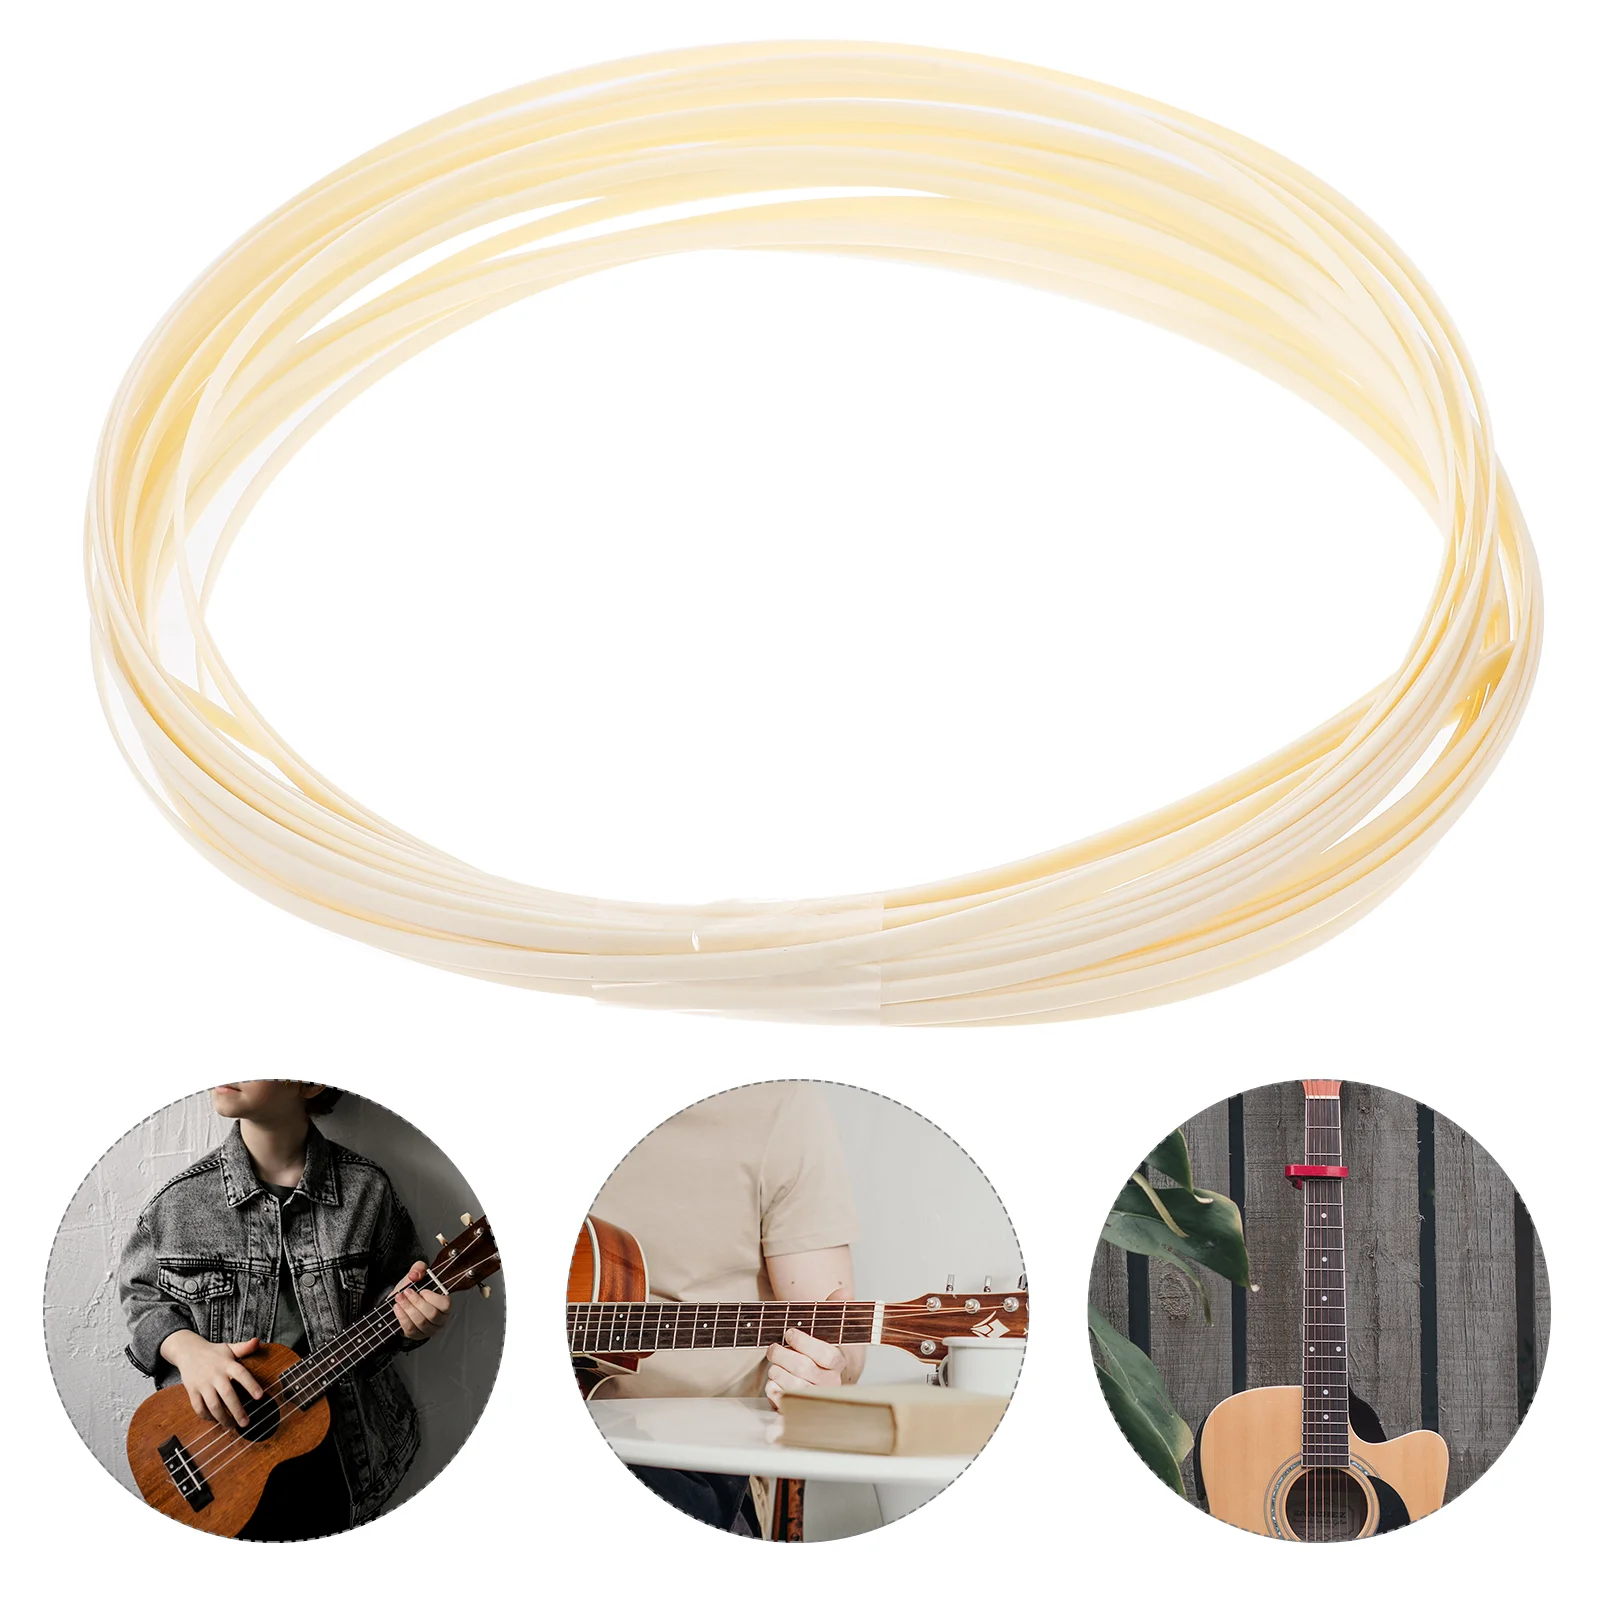 

10 Pcs Guitar Edging Supplies Trim Edge for Acoustic Decor Guitars Inlay Binding Trips Children Decorative Strip Material